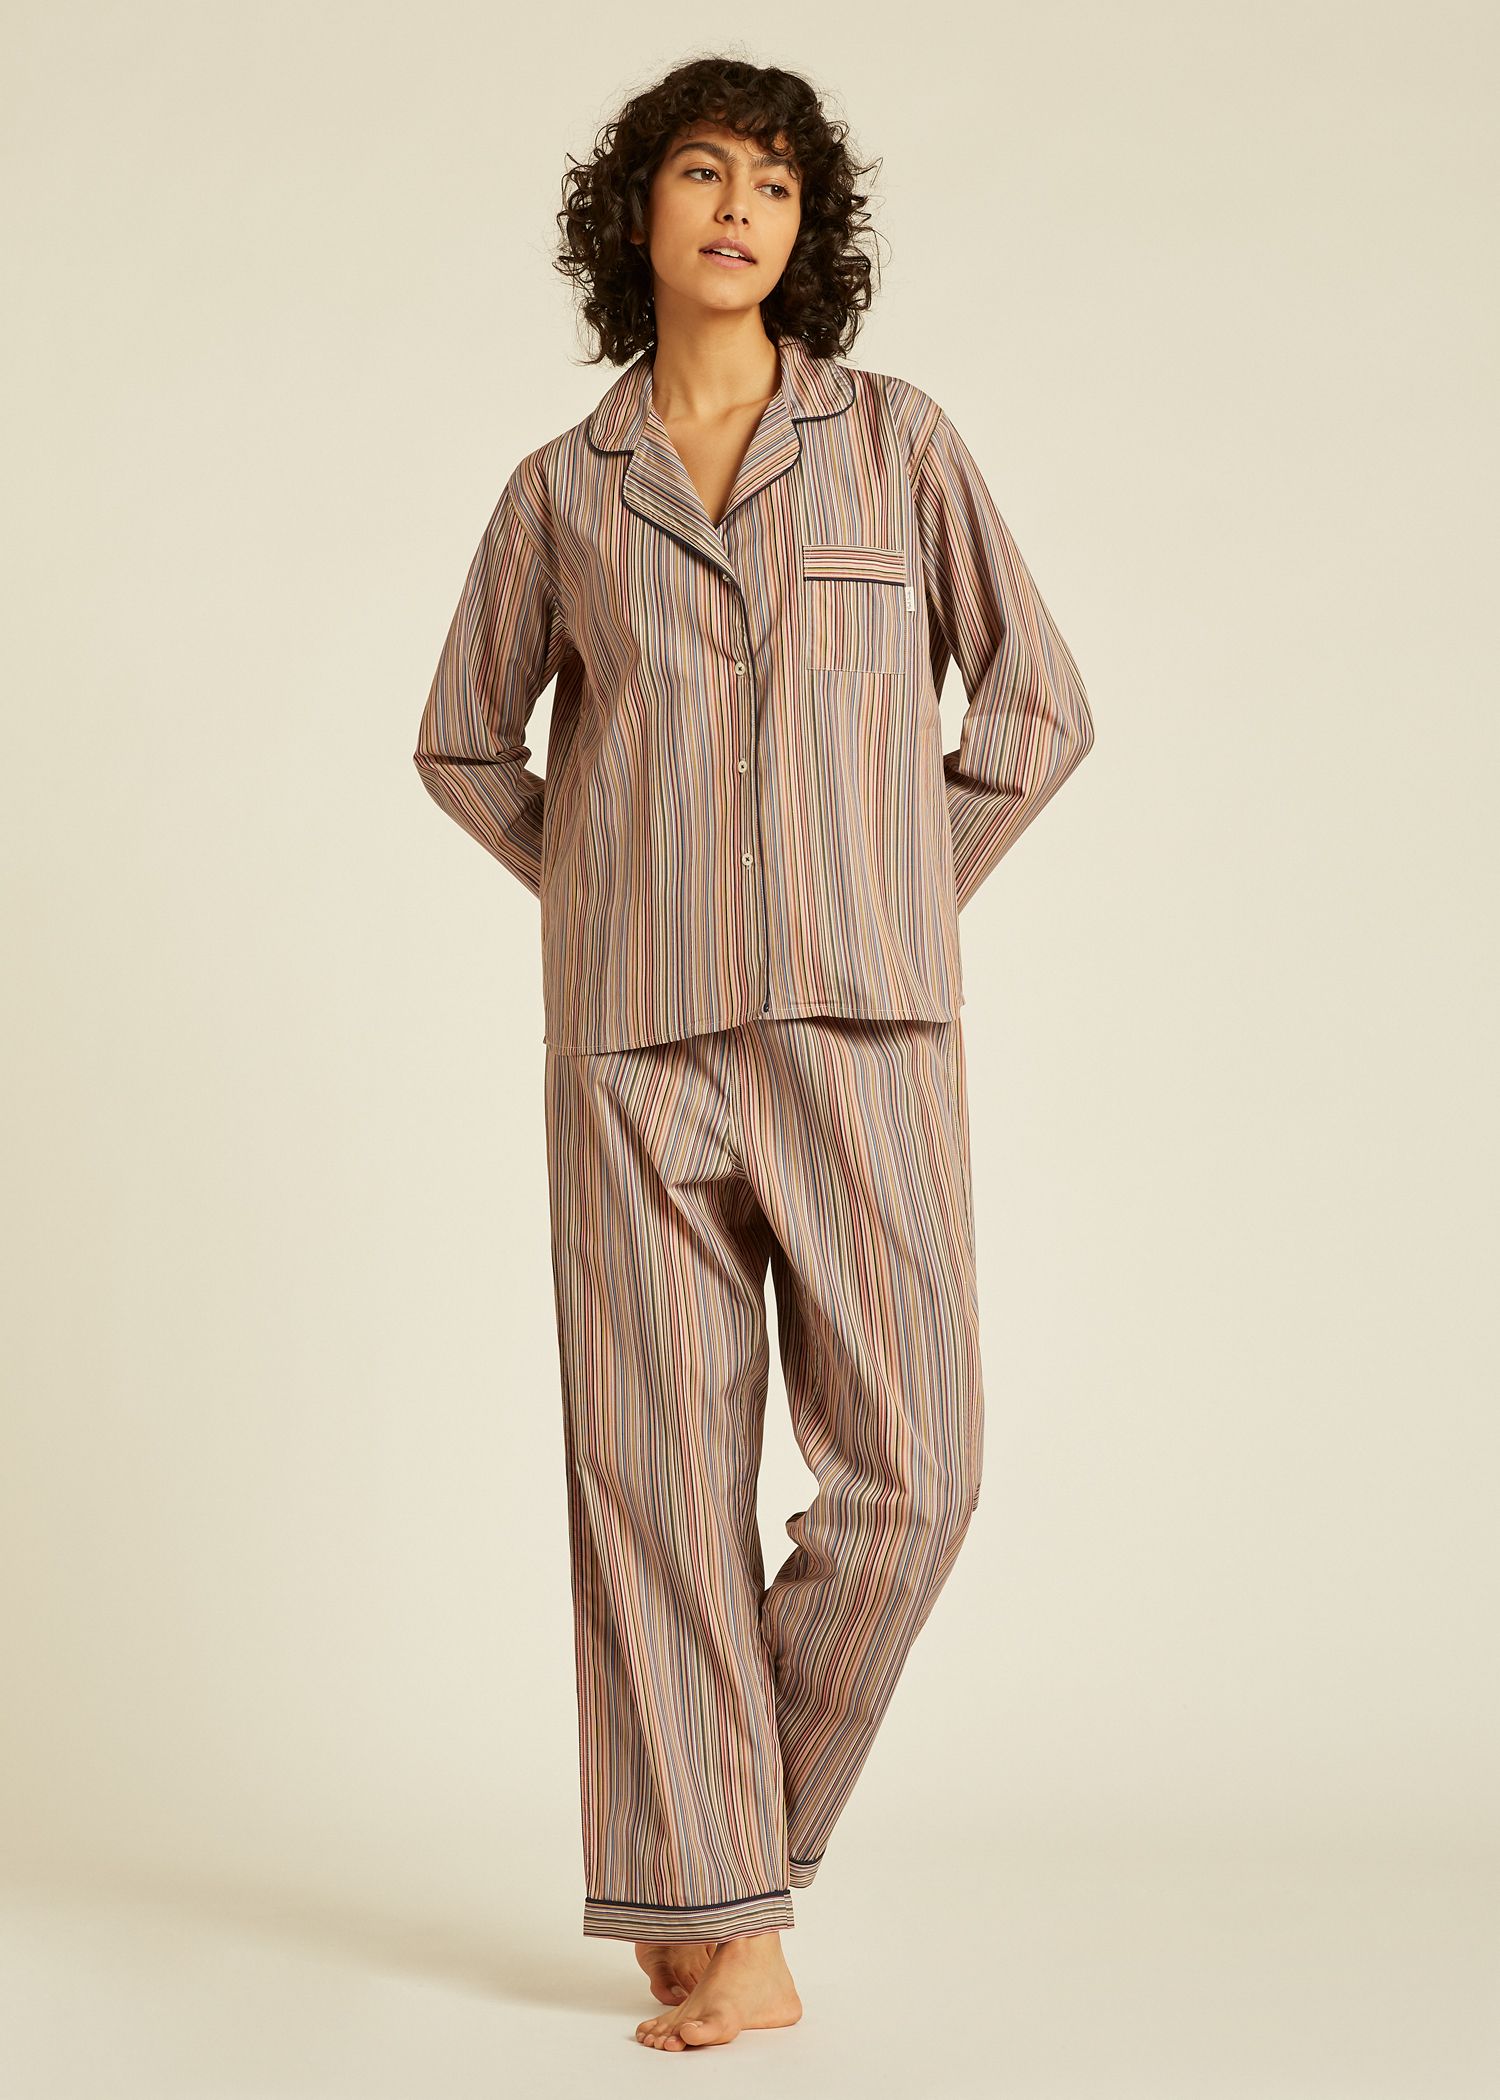 Pyjamas - Eminence, vente en ligne de Pyjamas